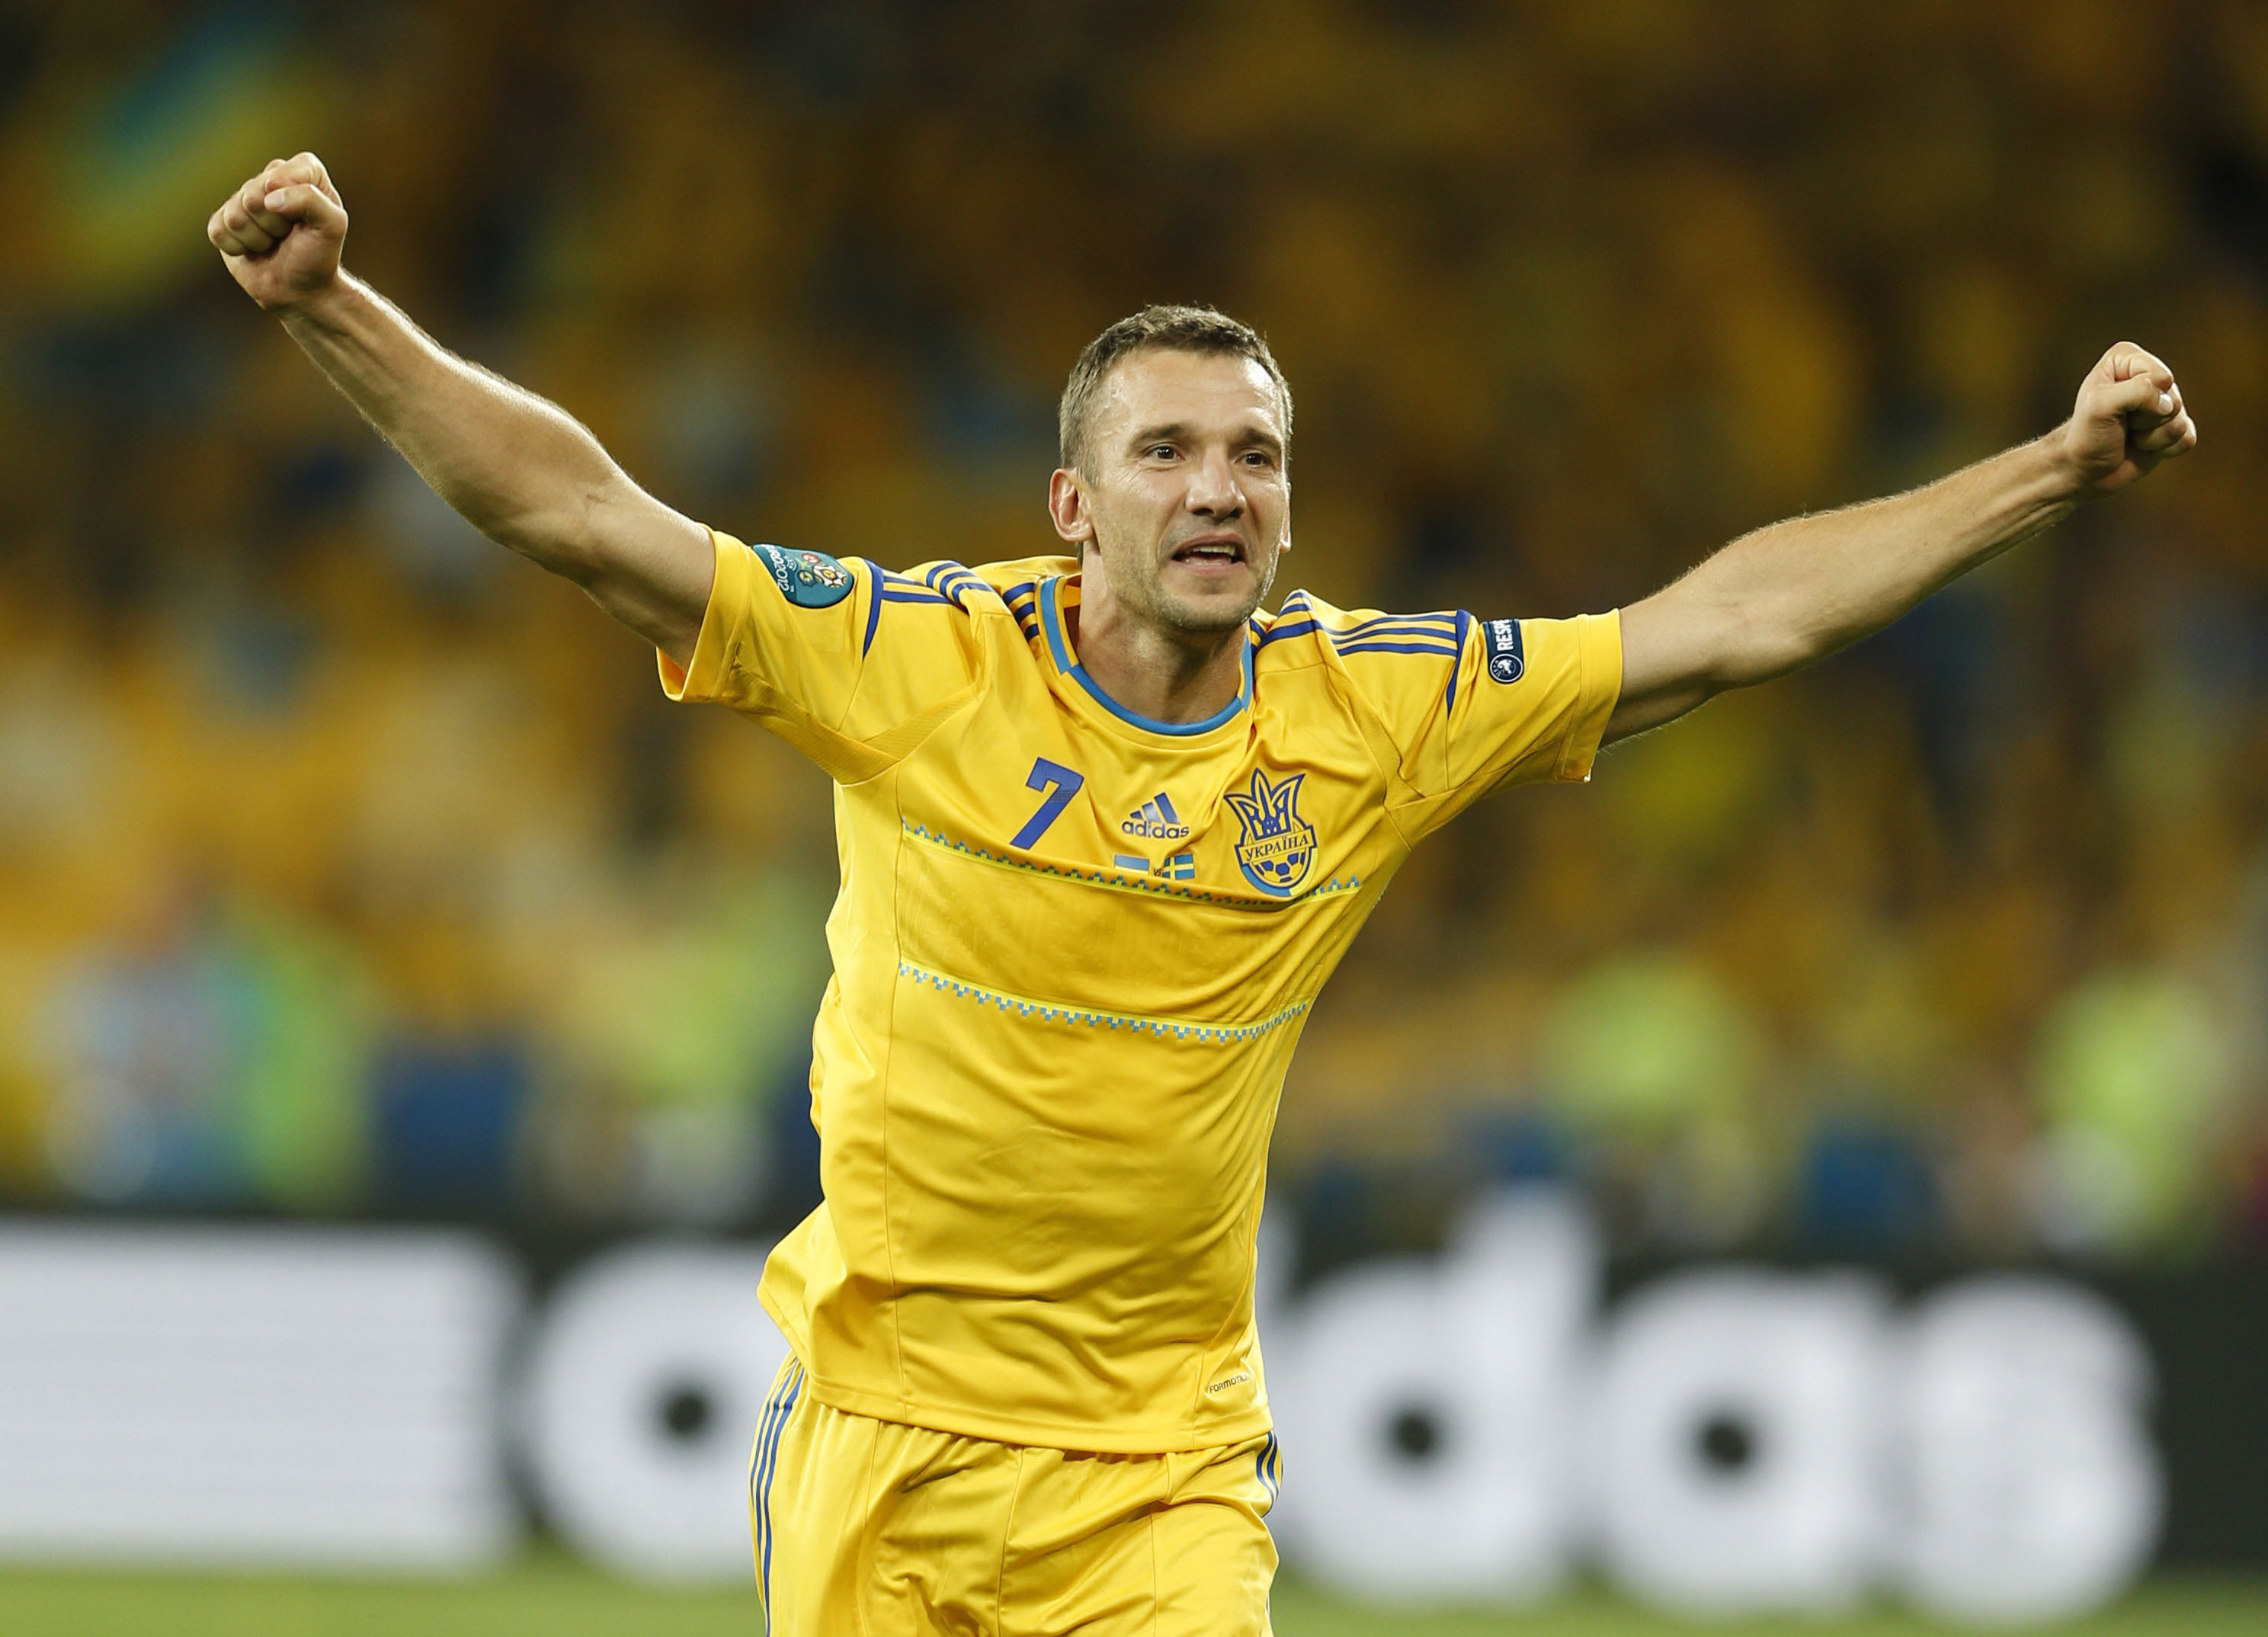 509172 descargar imagen deporte, andriy shevchenko, selección de fútbol de ucrania, fútbol: fondos de pantalla y protectores de pantalla gratis